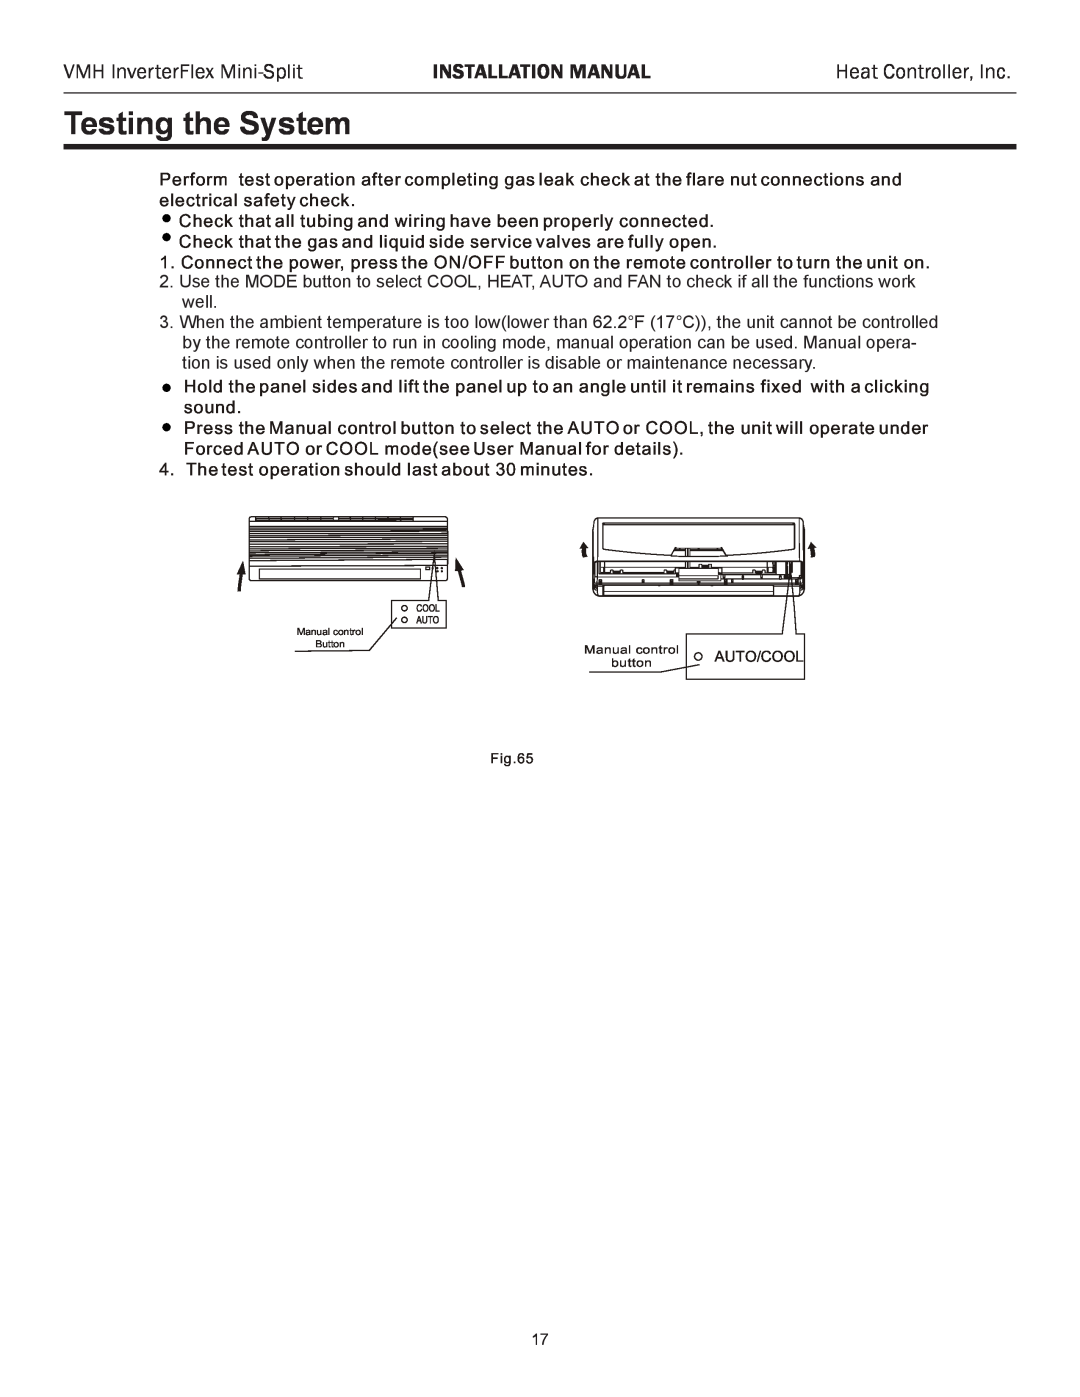 Heat Controller VMH 09, VMH 27 Testing the System, VMH InverterFlex Mini-Split, Installation Manual, Heat Controller, Inc 